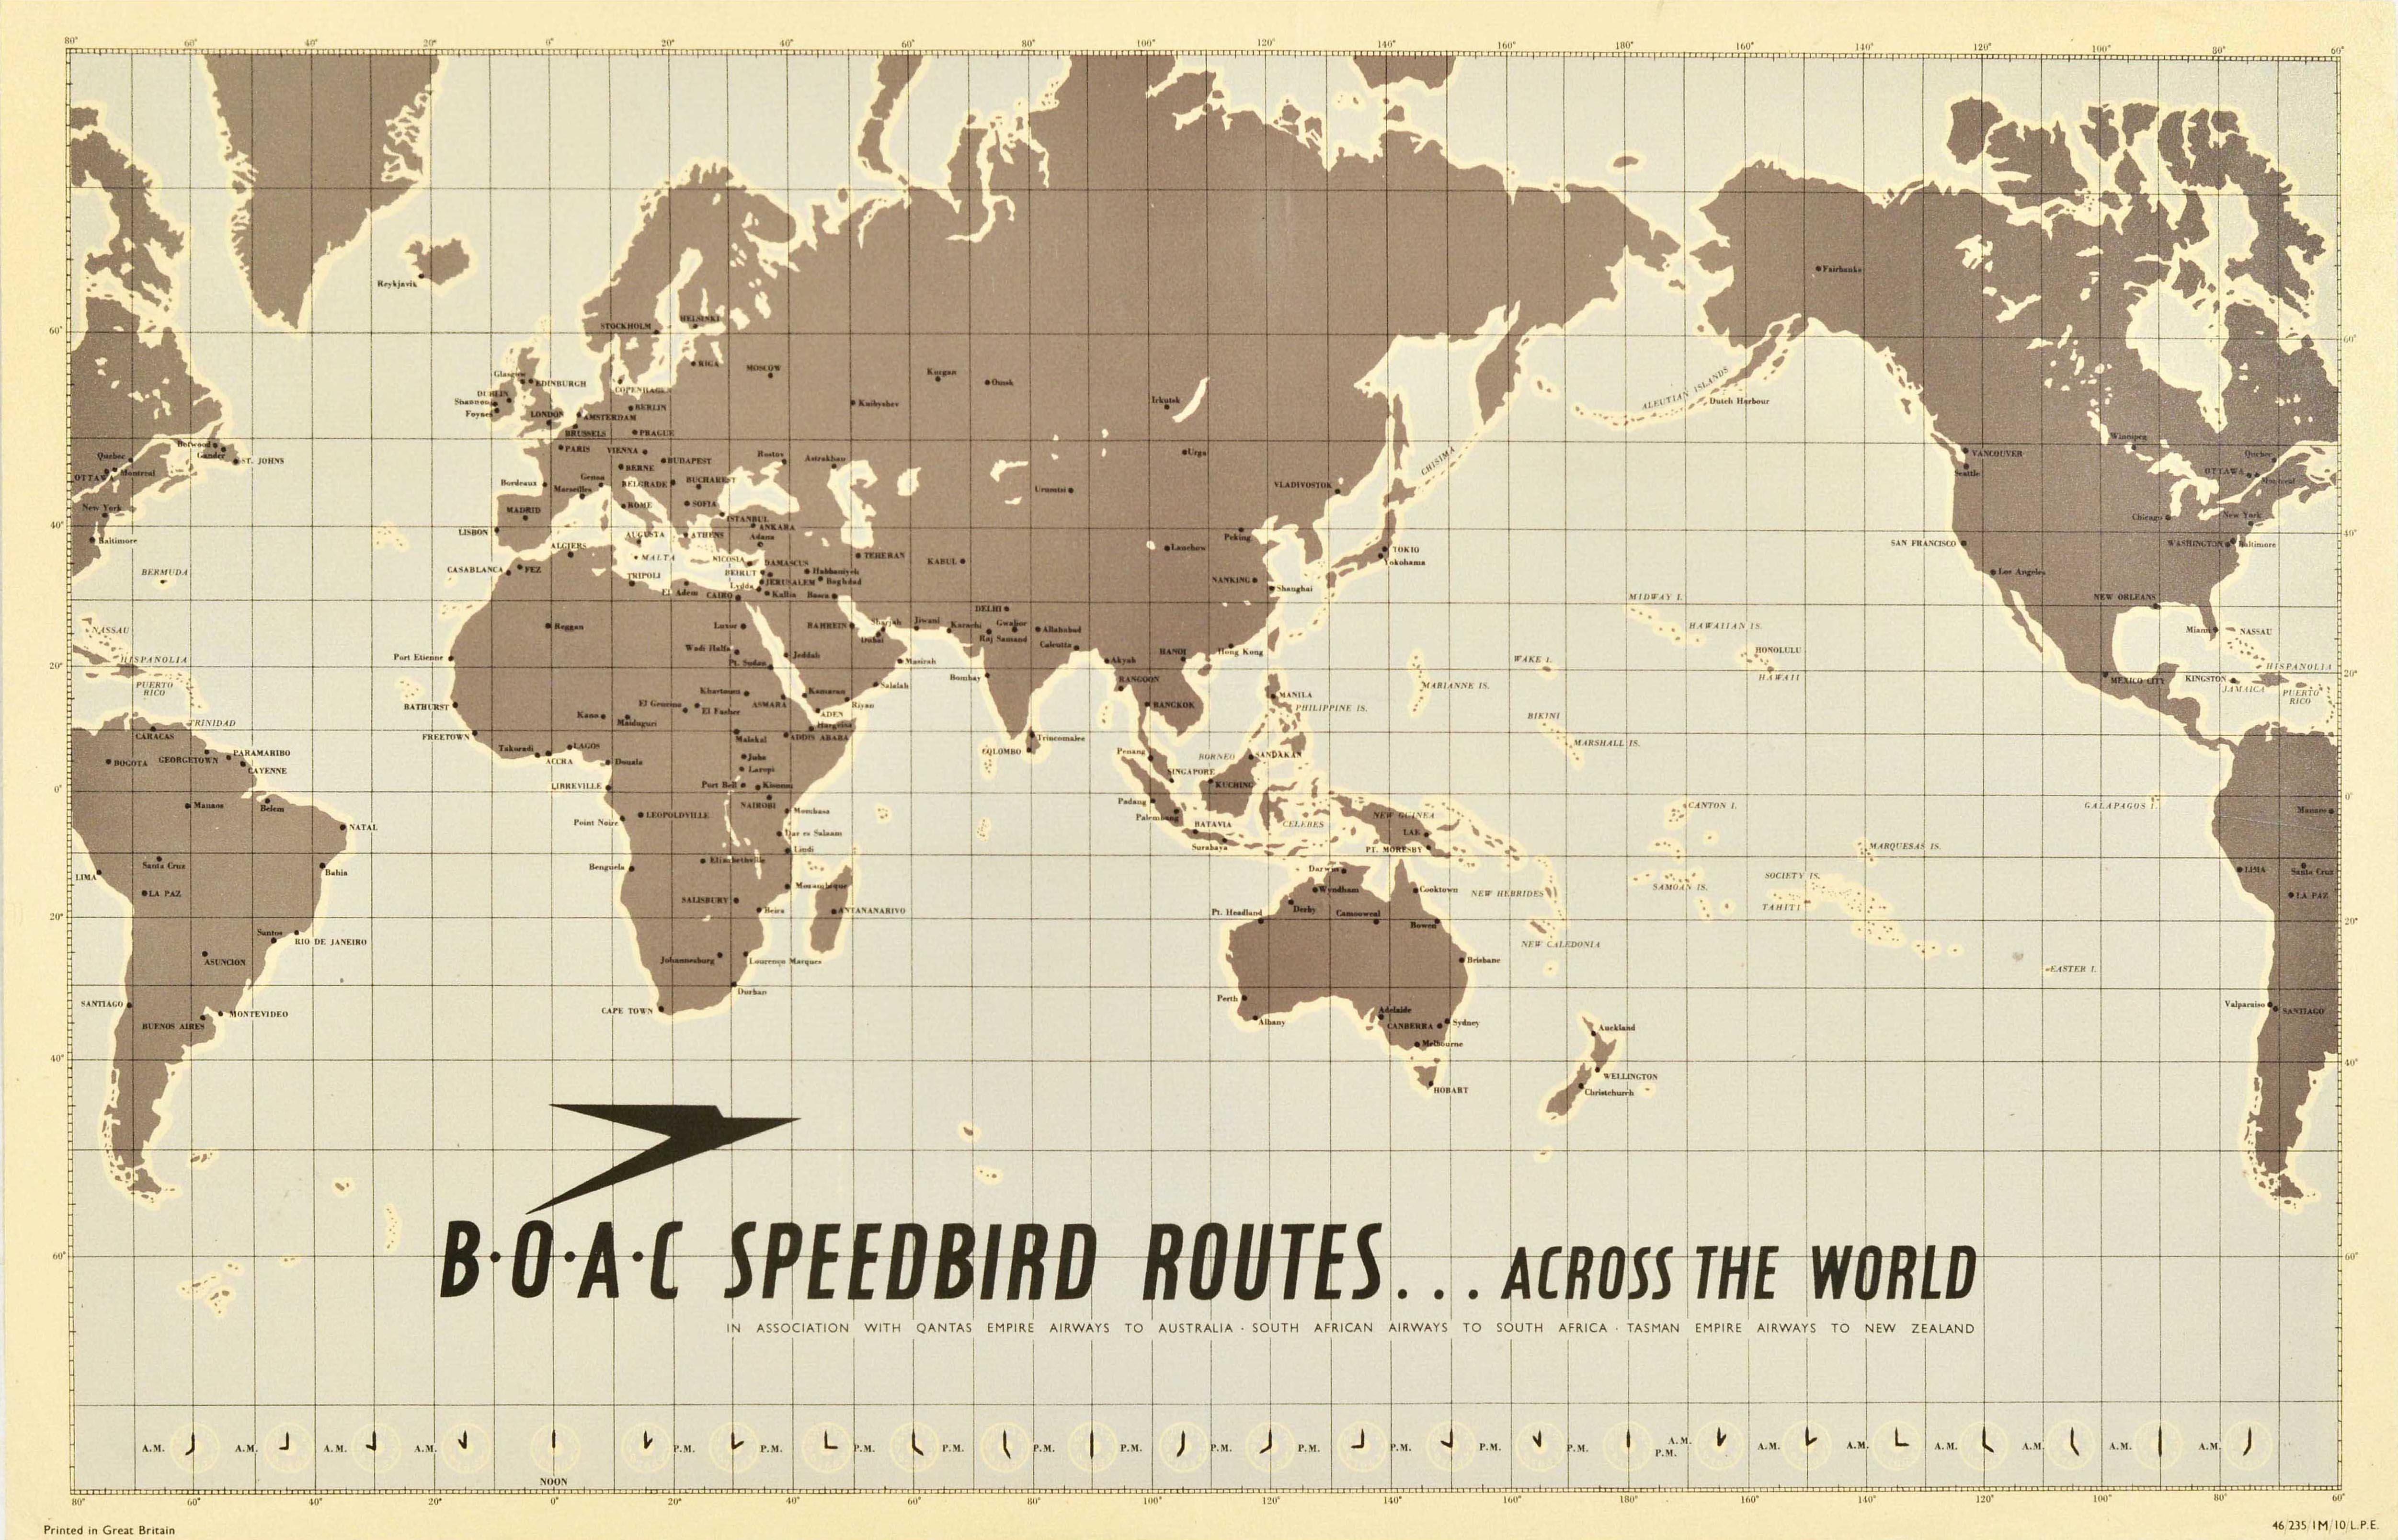 Unknown Print - Original Vintage Travel Poster BOAC Speedbird Routes Across The World Map Design